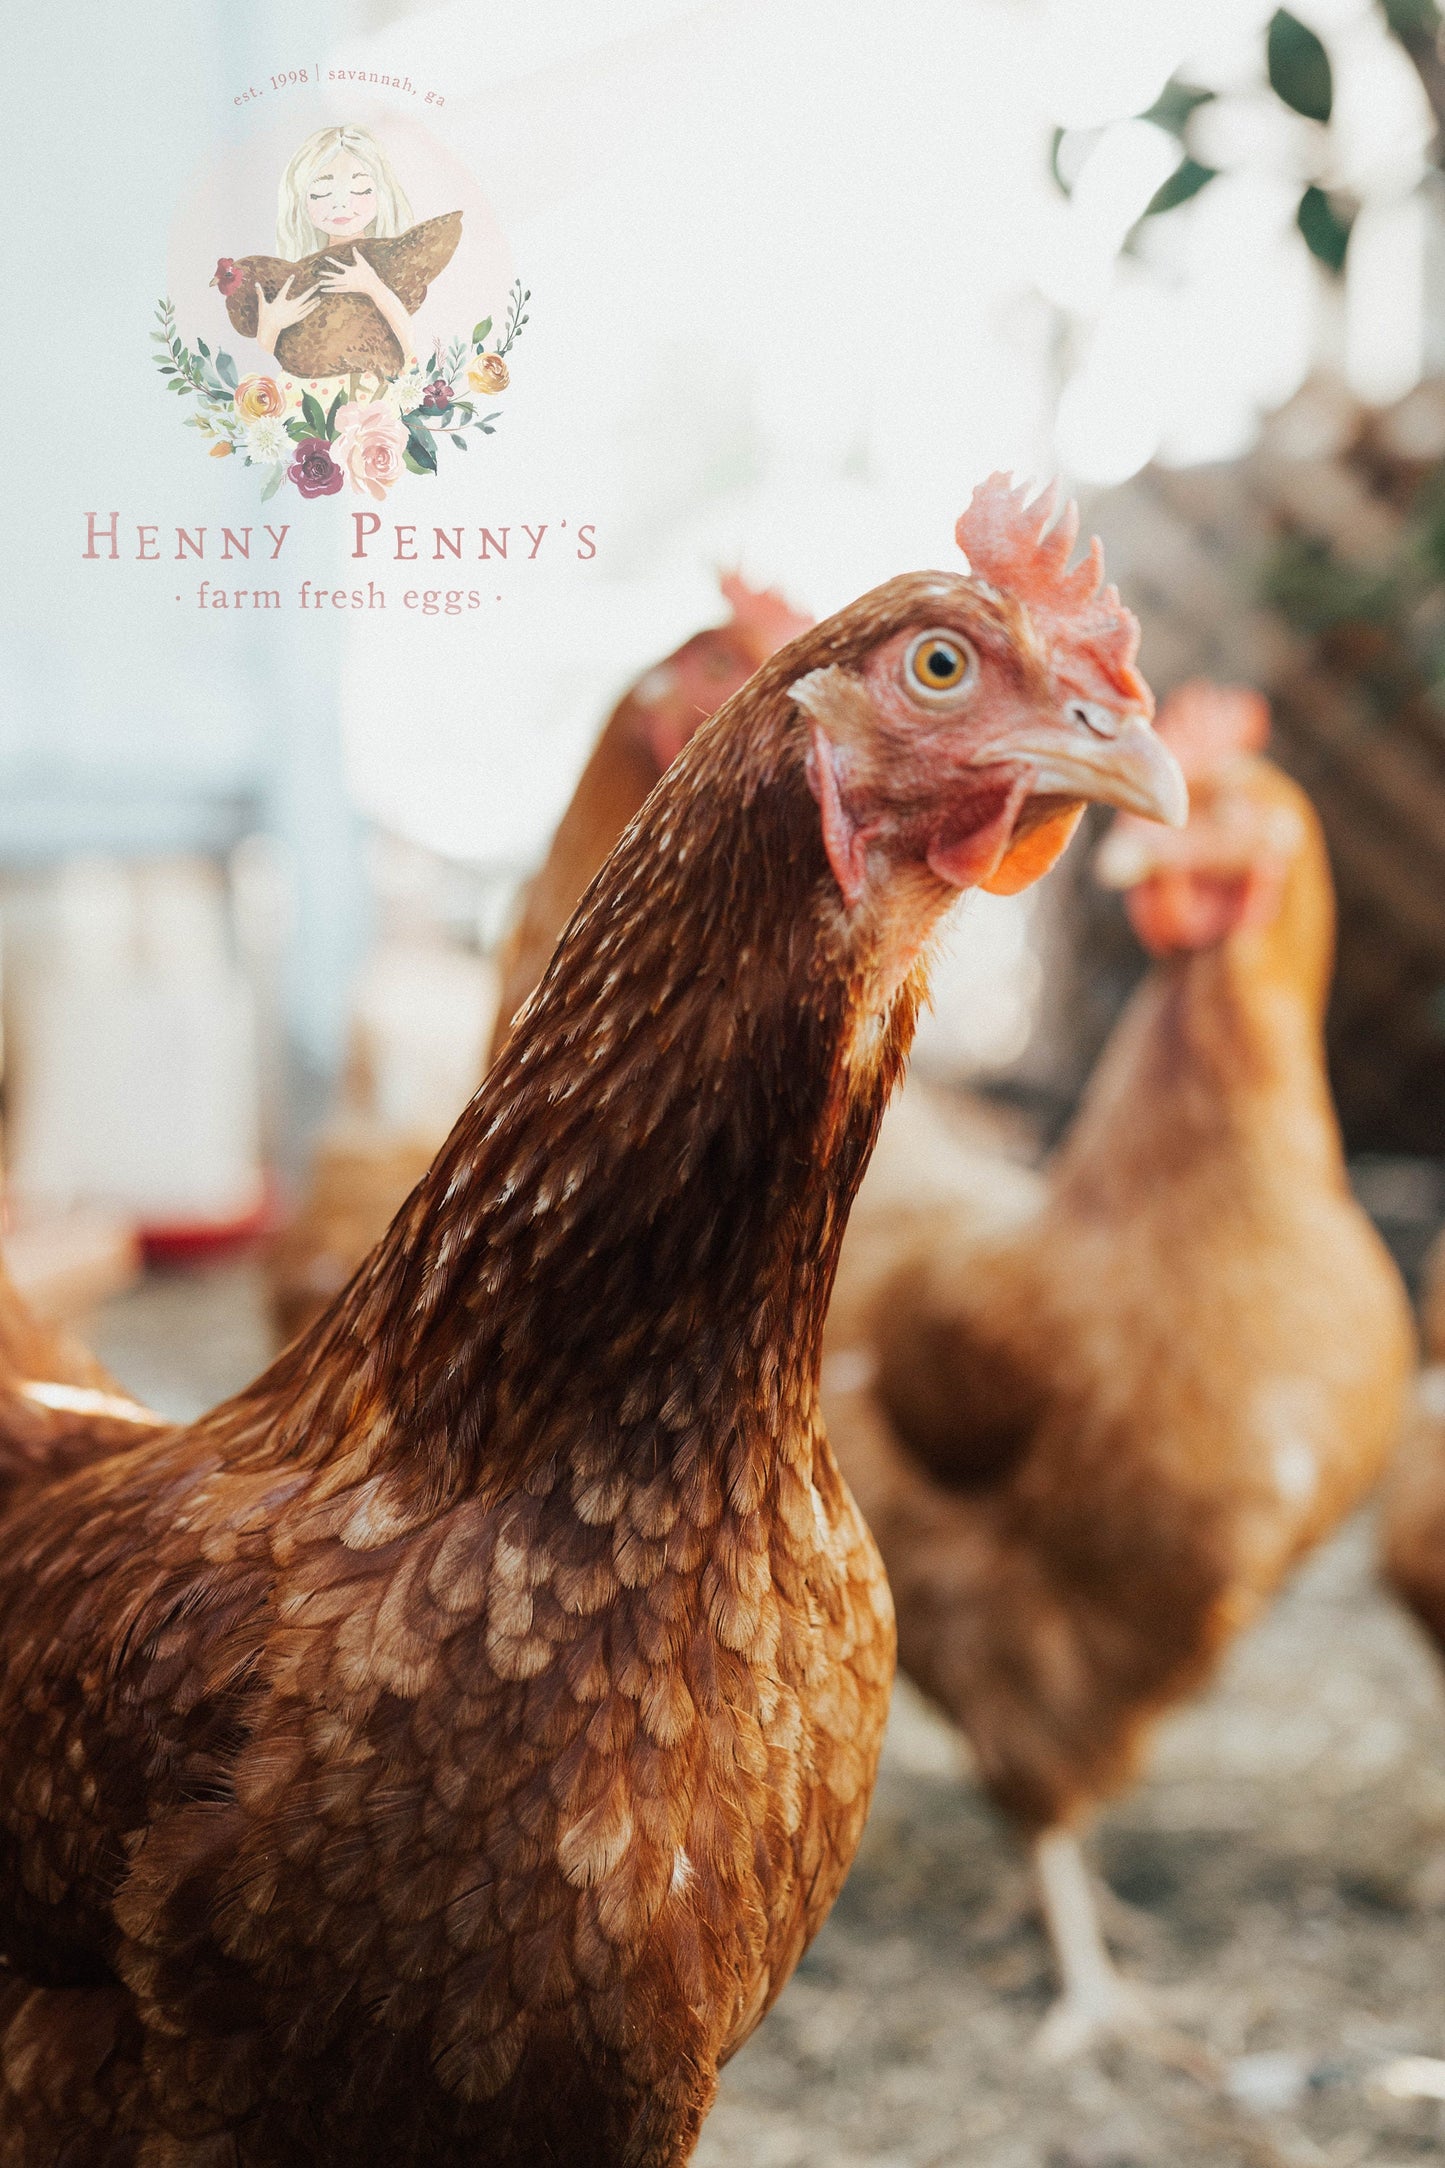 Henny Penny's | Premade Logo Design | Chicken, Rooster, Hen, Farm, Egg